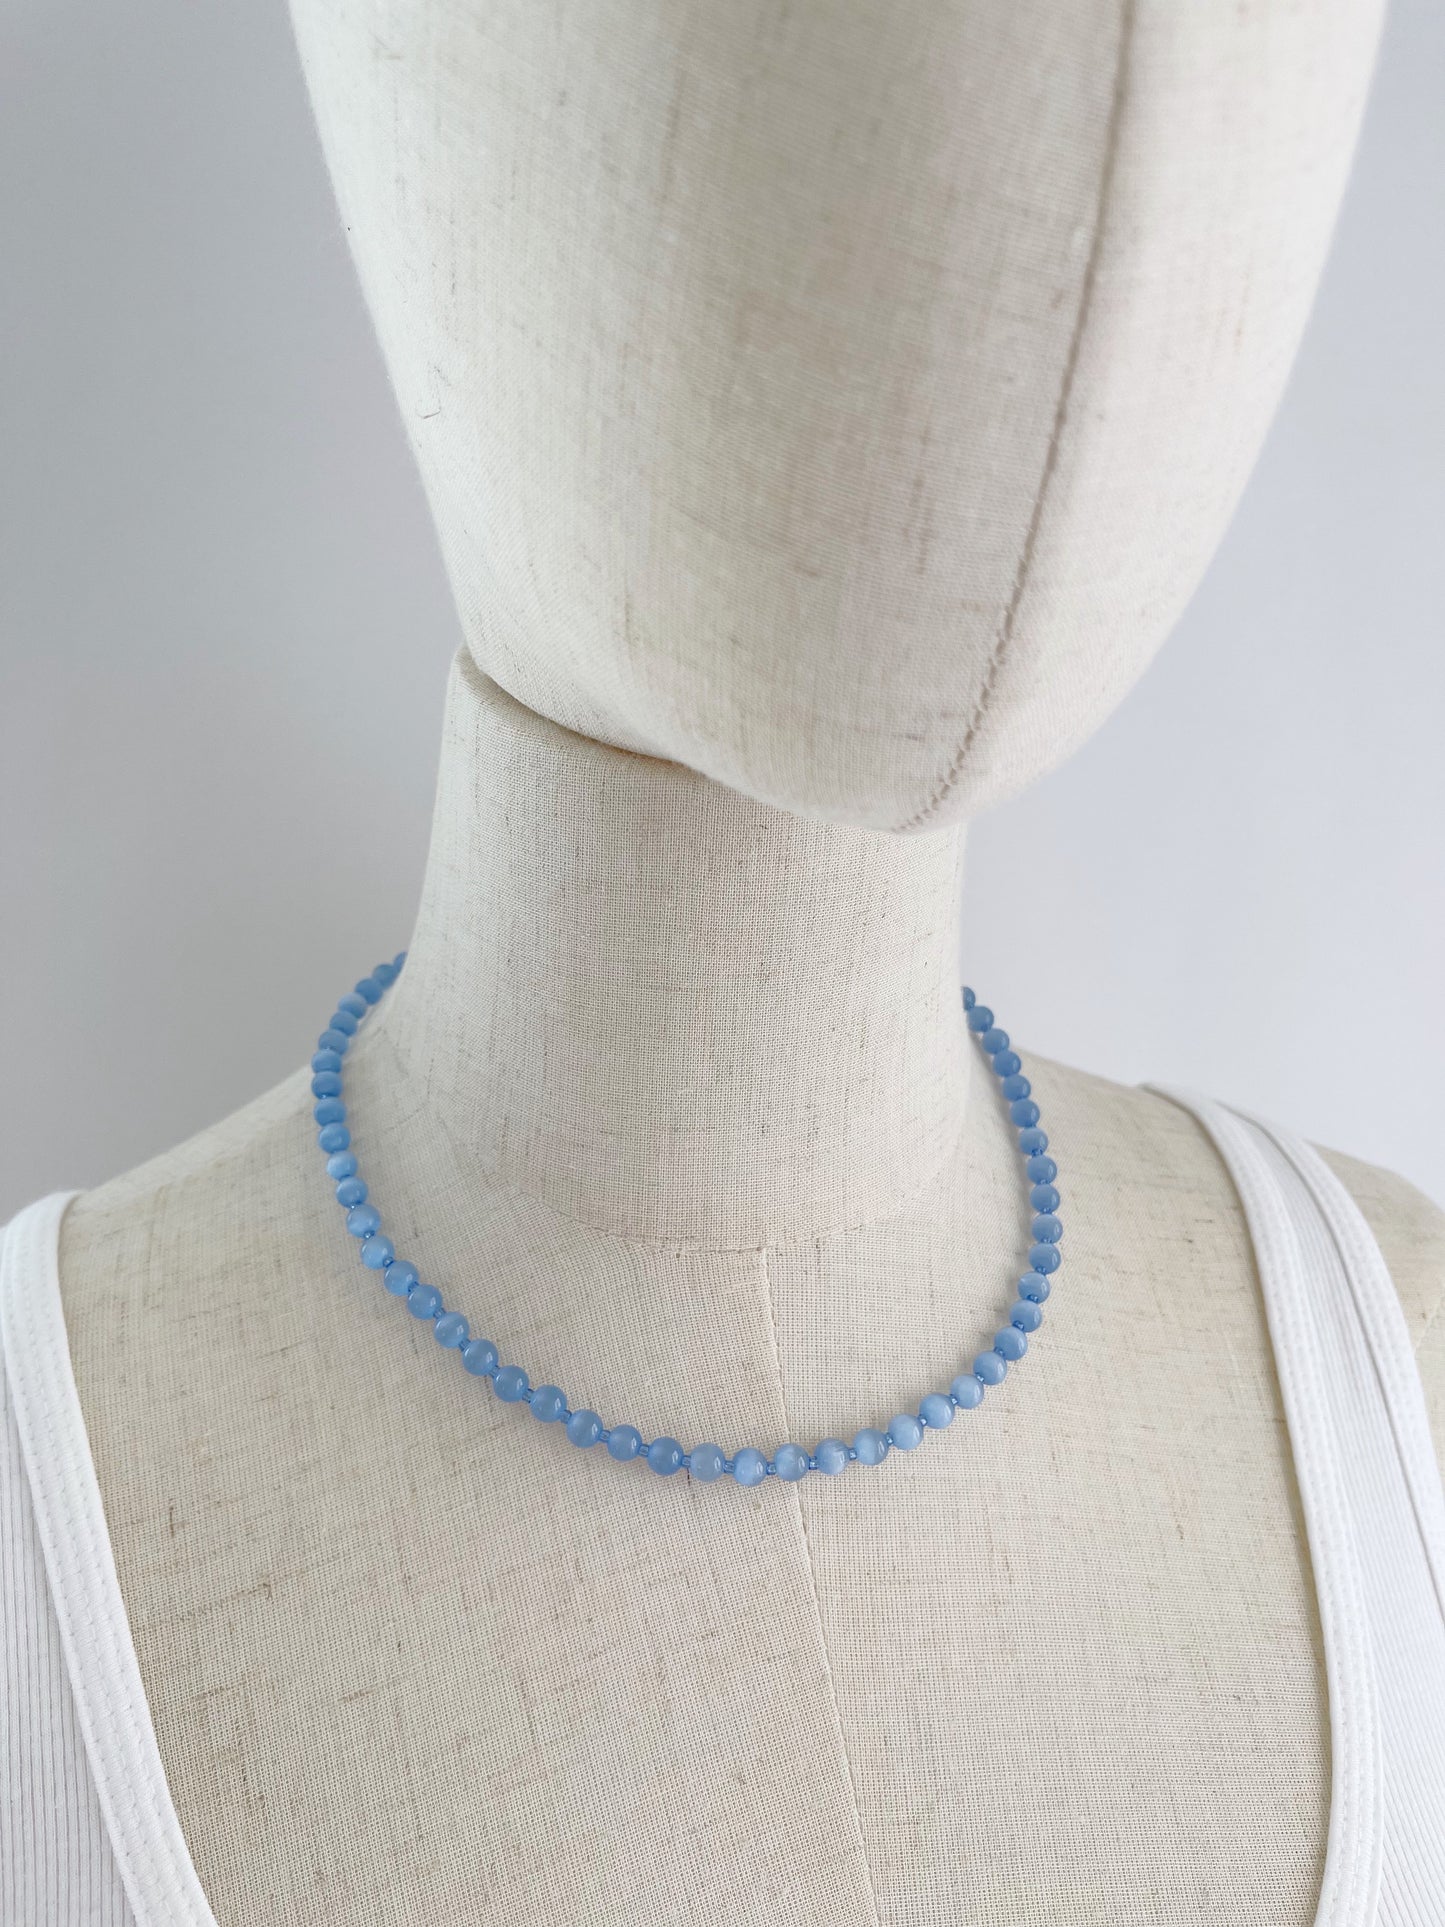 BA. Blue Cat’s Eye necklace 6mm 18”